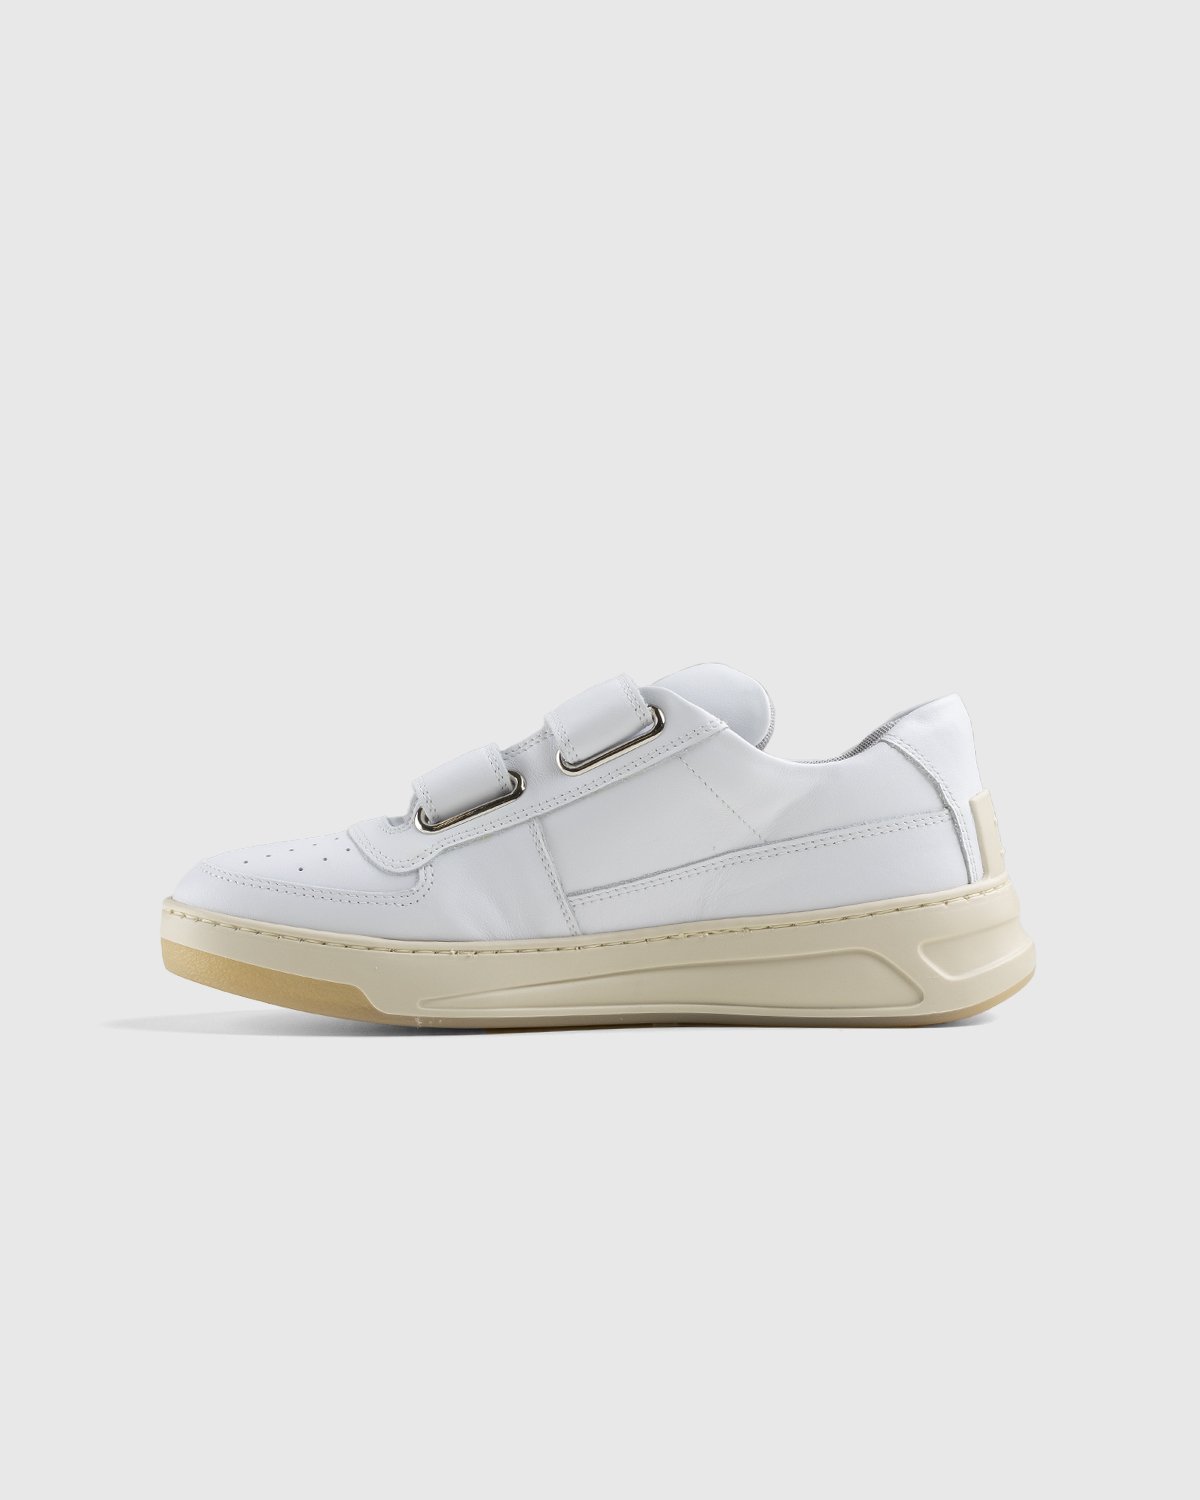 Acne Studios - Perey Velcro Strap Sneakers White - Footwear - White - Image 2